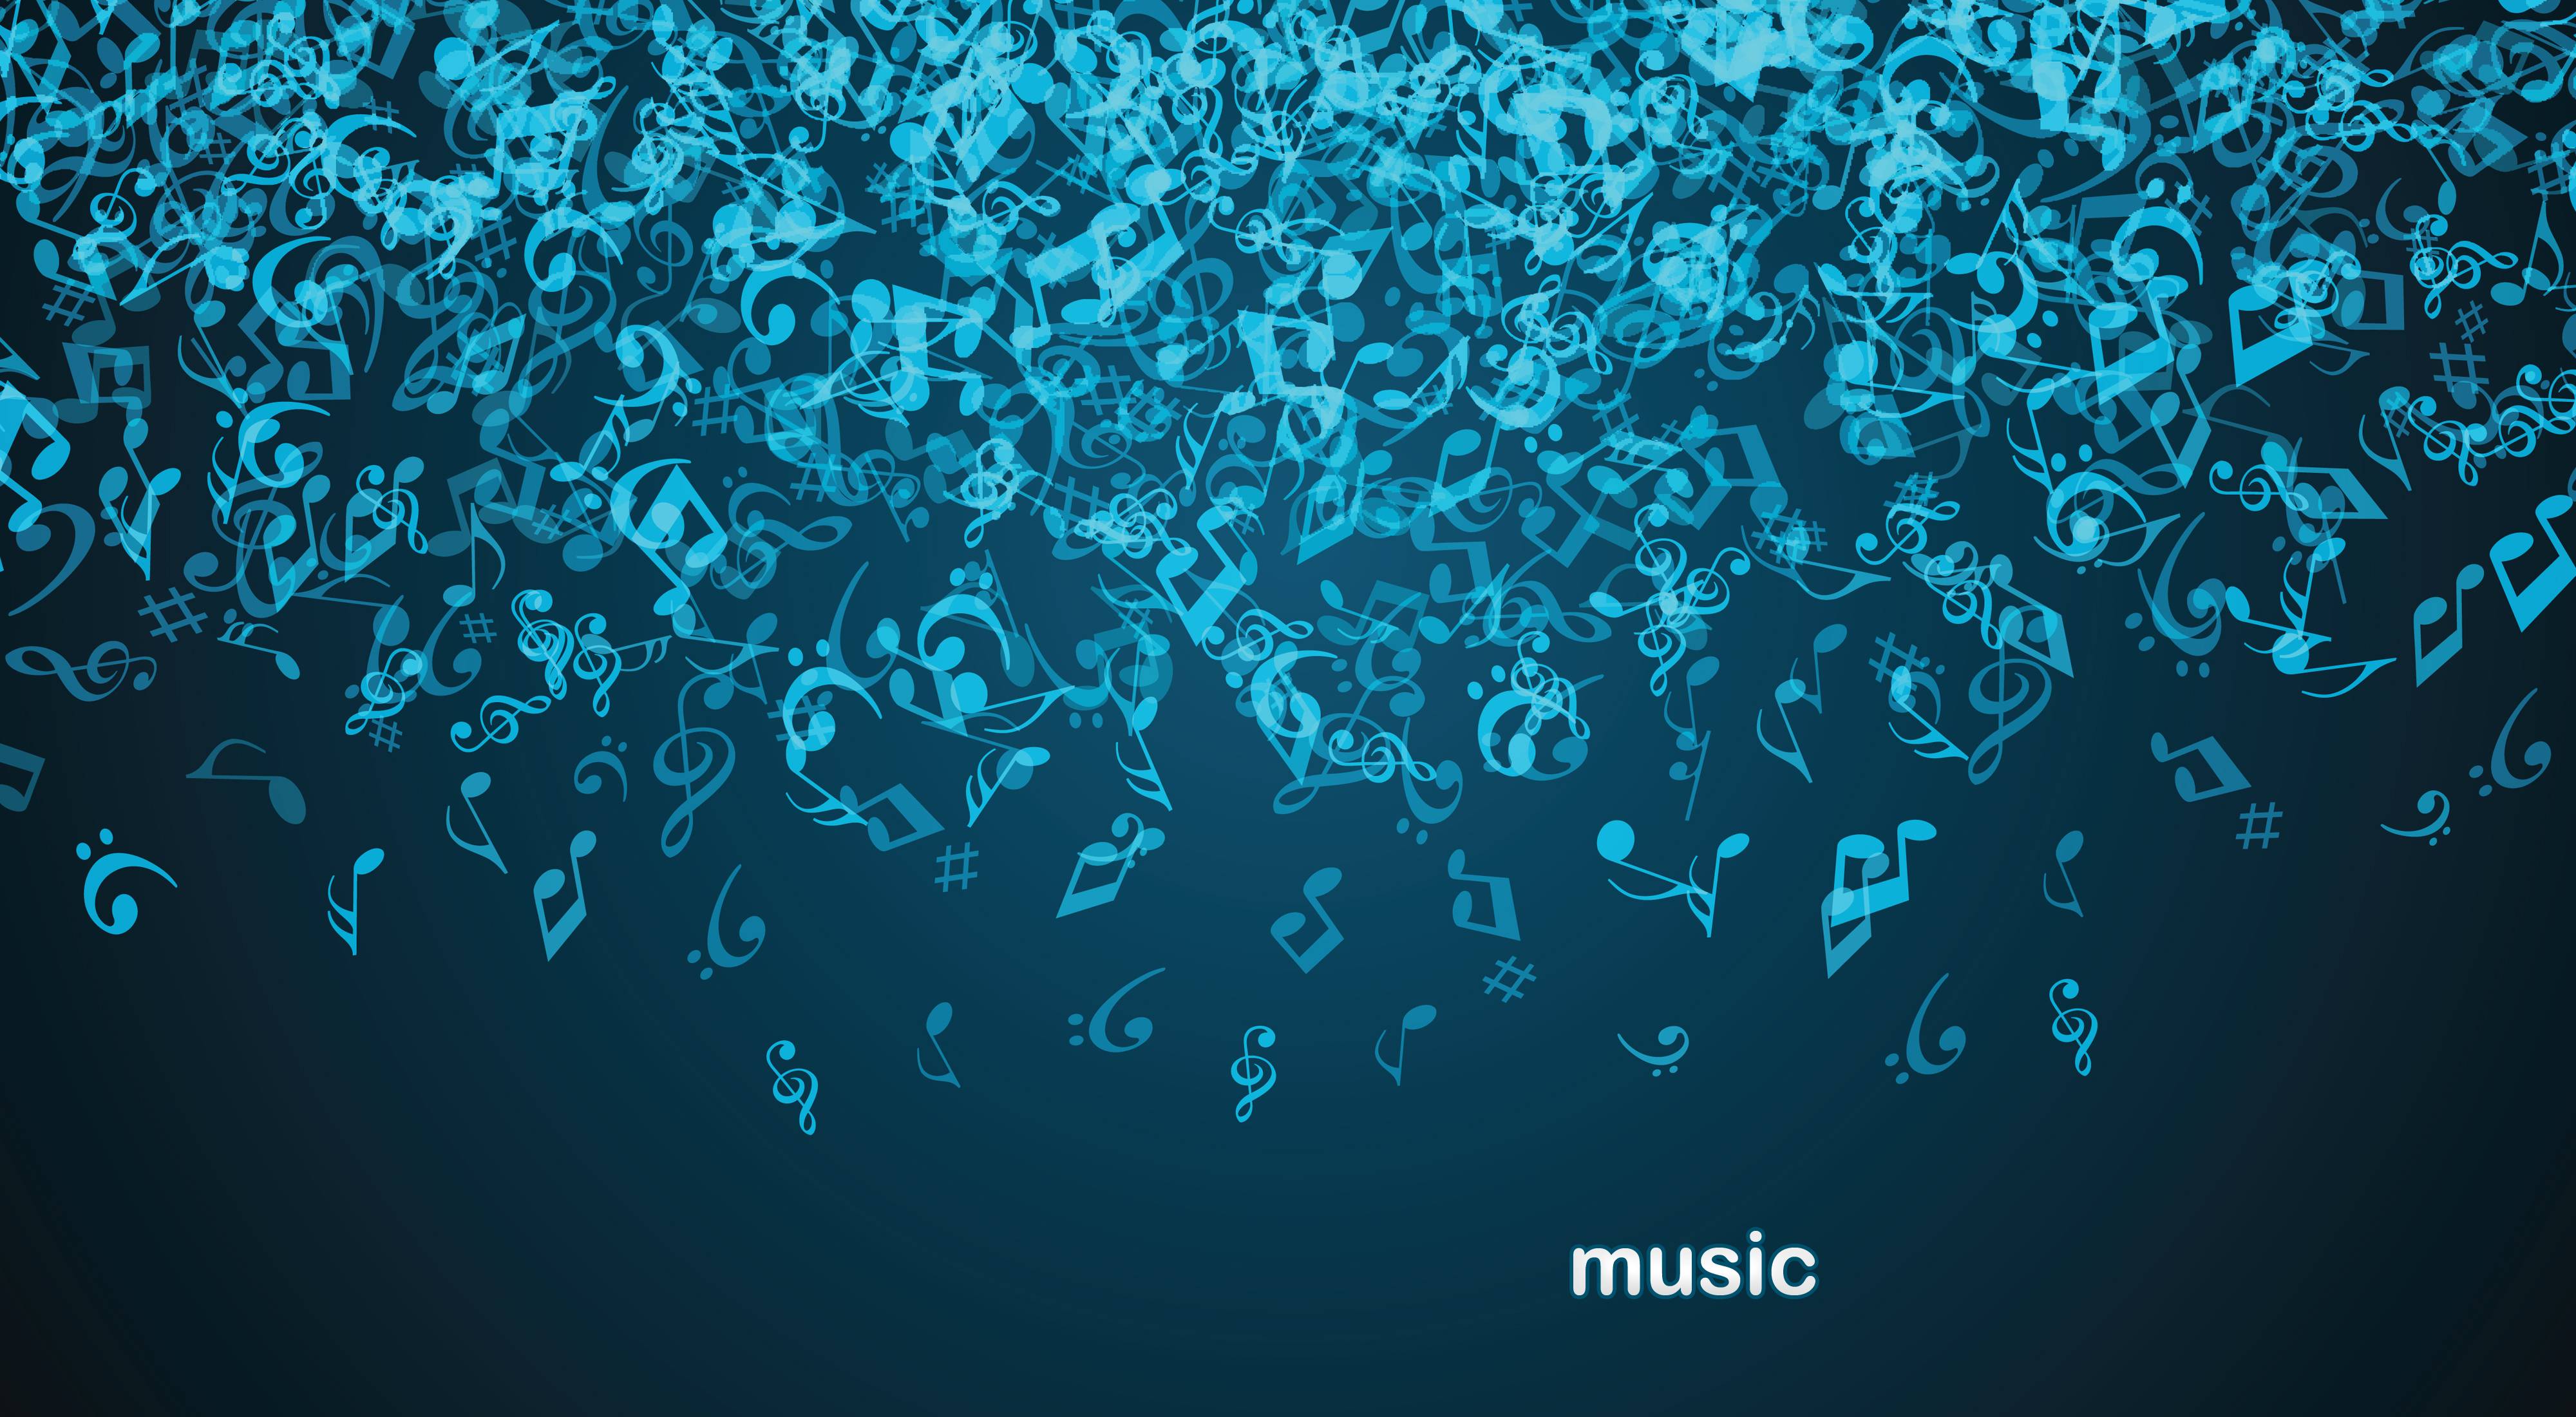 Download wallpaper music, music, a dark blue background